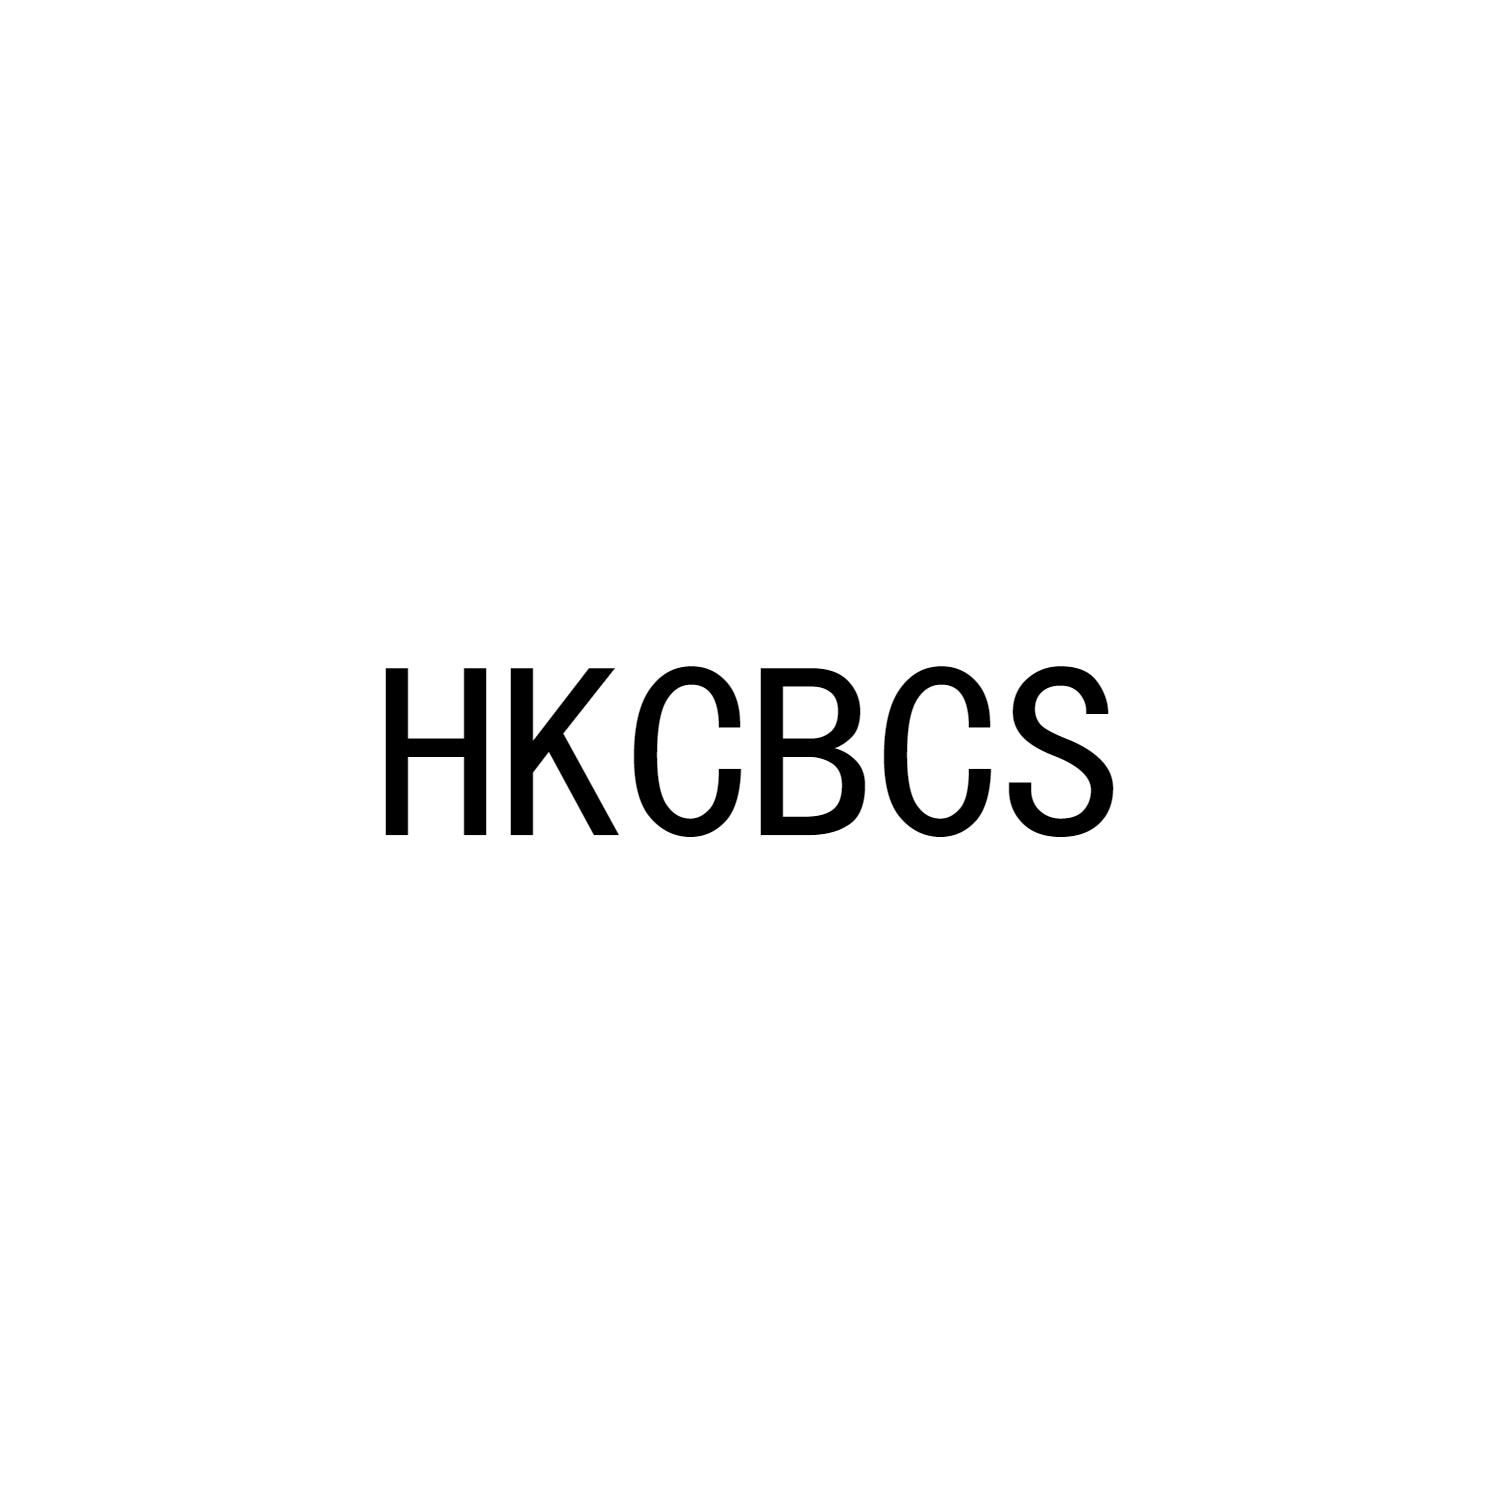 HKCBCS